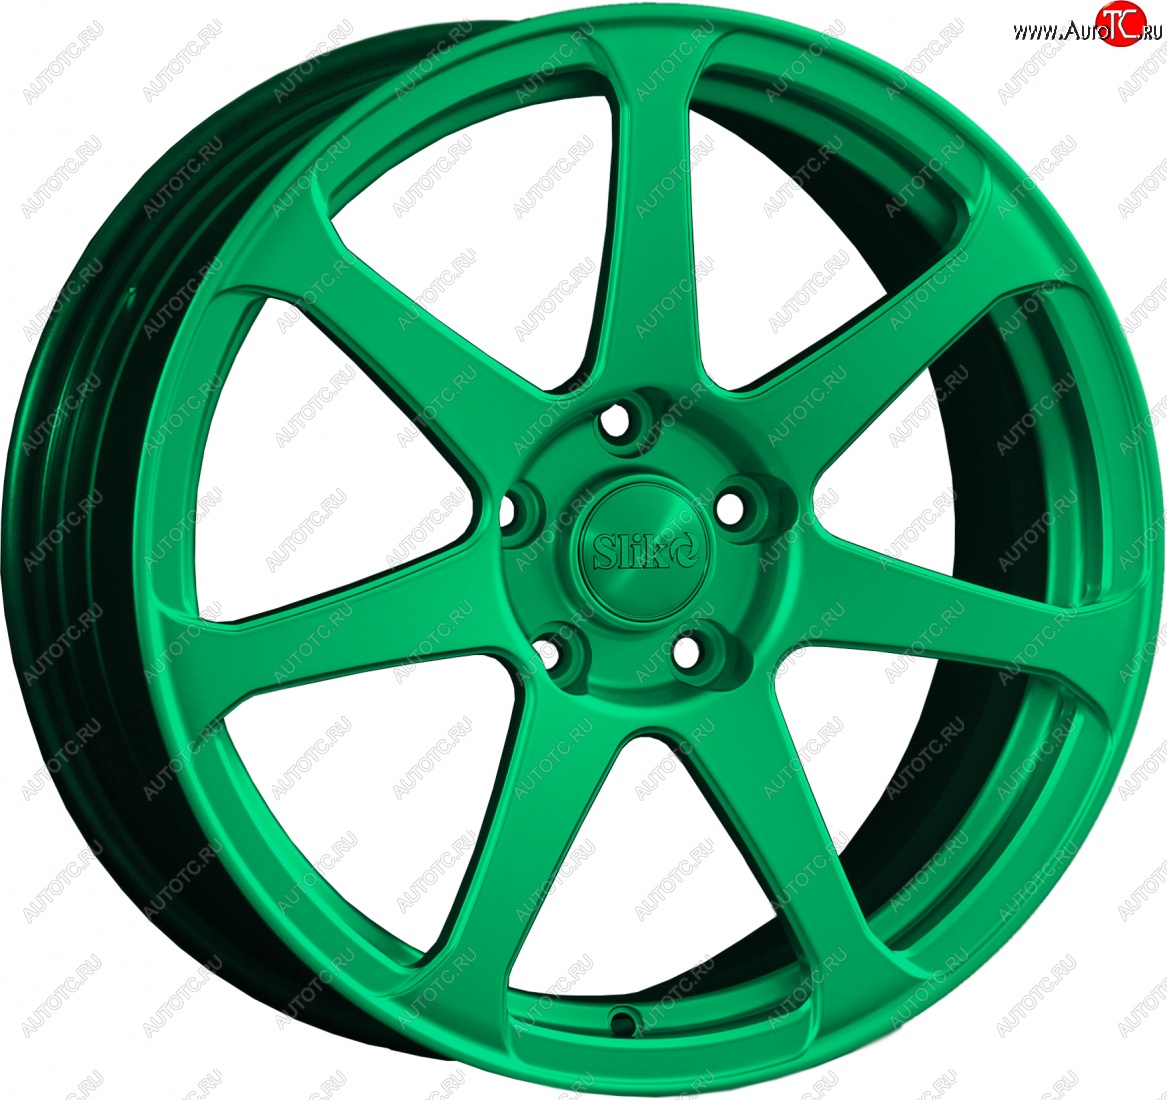 14 499 р. Кованый диск Slik classik R17x7.5 Candy Green изумрудно-зеленый 7.5x17 Chevrolet Lacetti хэтчбек (2002-2013) 4x114.3xDIA56.6xET44.0 (Цвет: Candy Green изумрудно-зеленый 7.5x17)